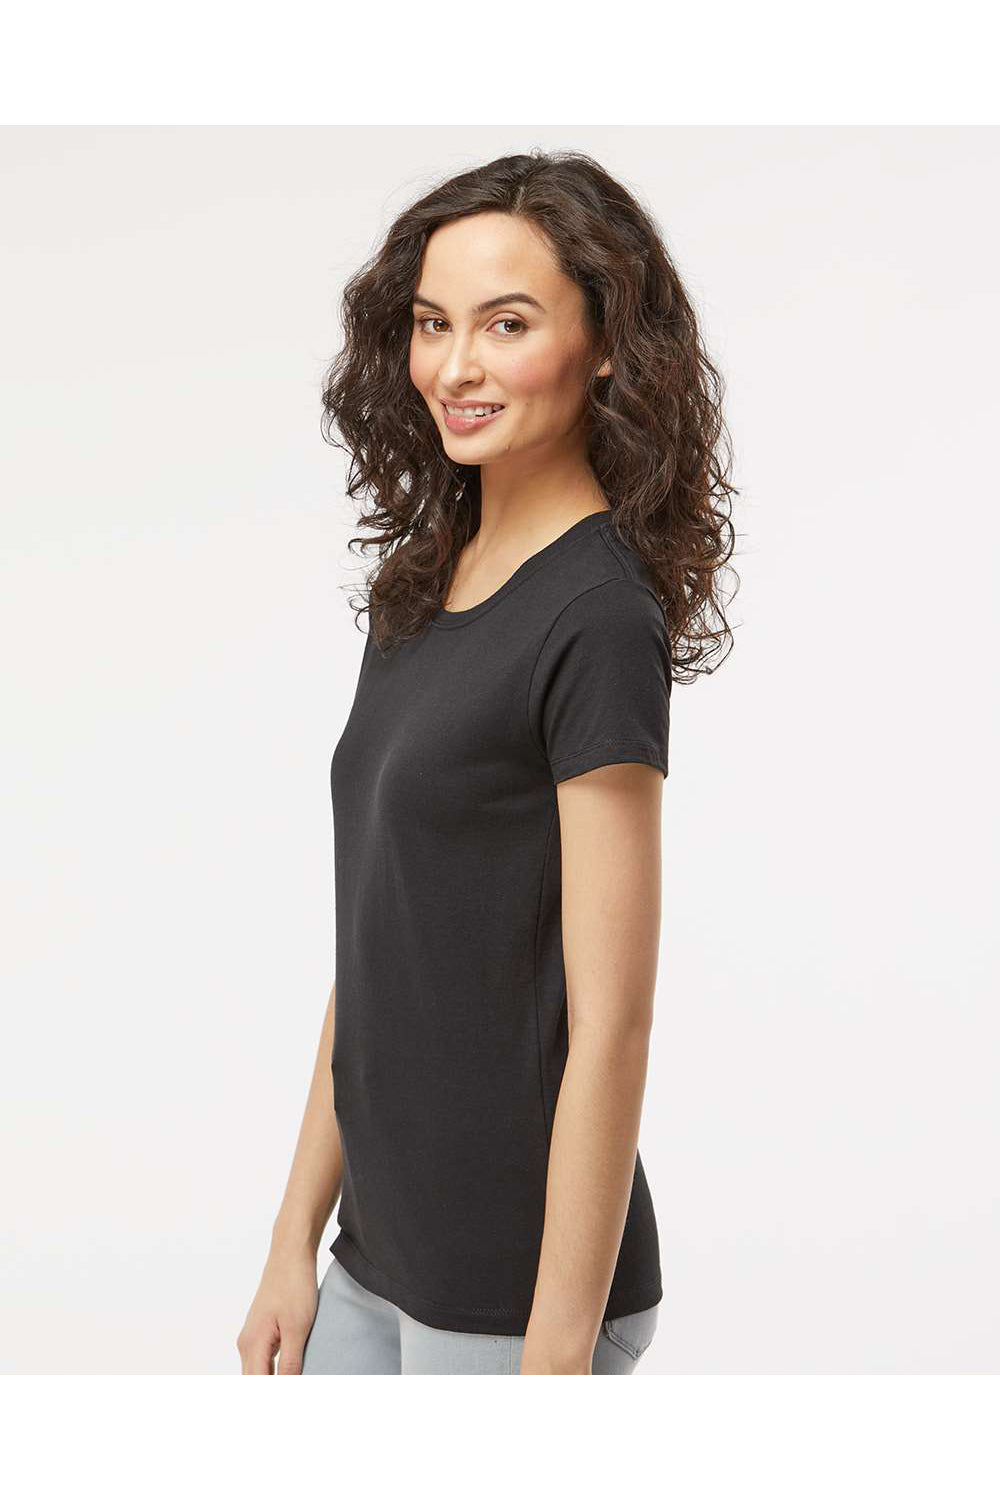 M&O 4810 Womens Gold Soft Touch Short Sleeve Crewneck T-Shirt Black Model Side